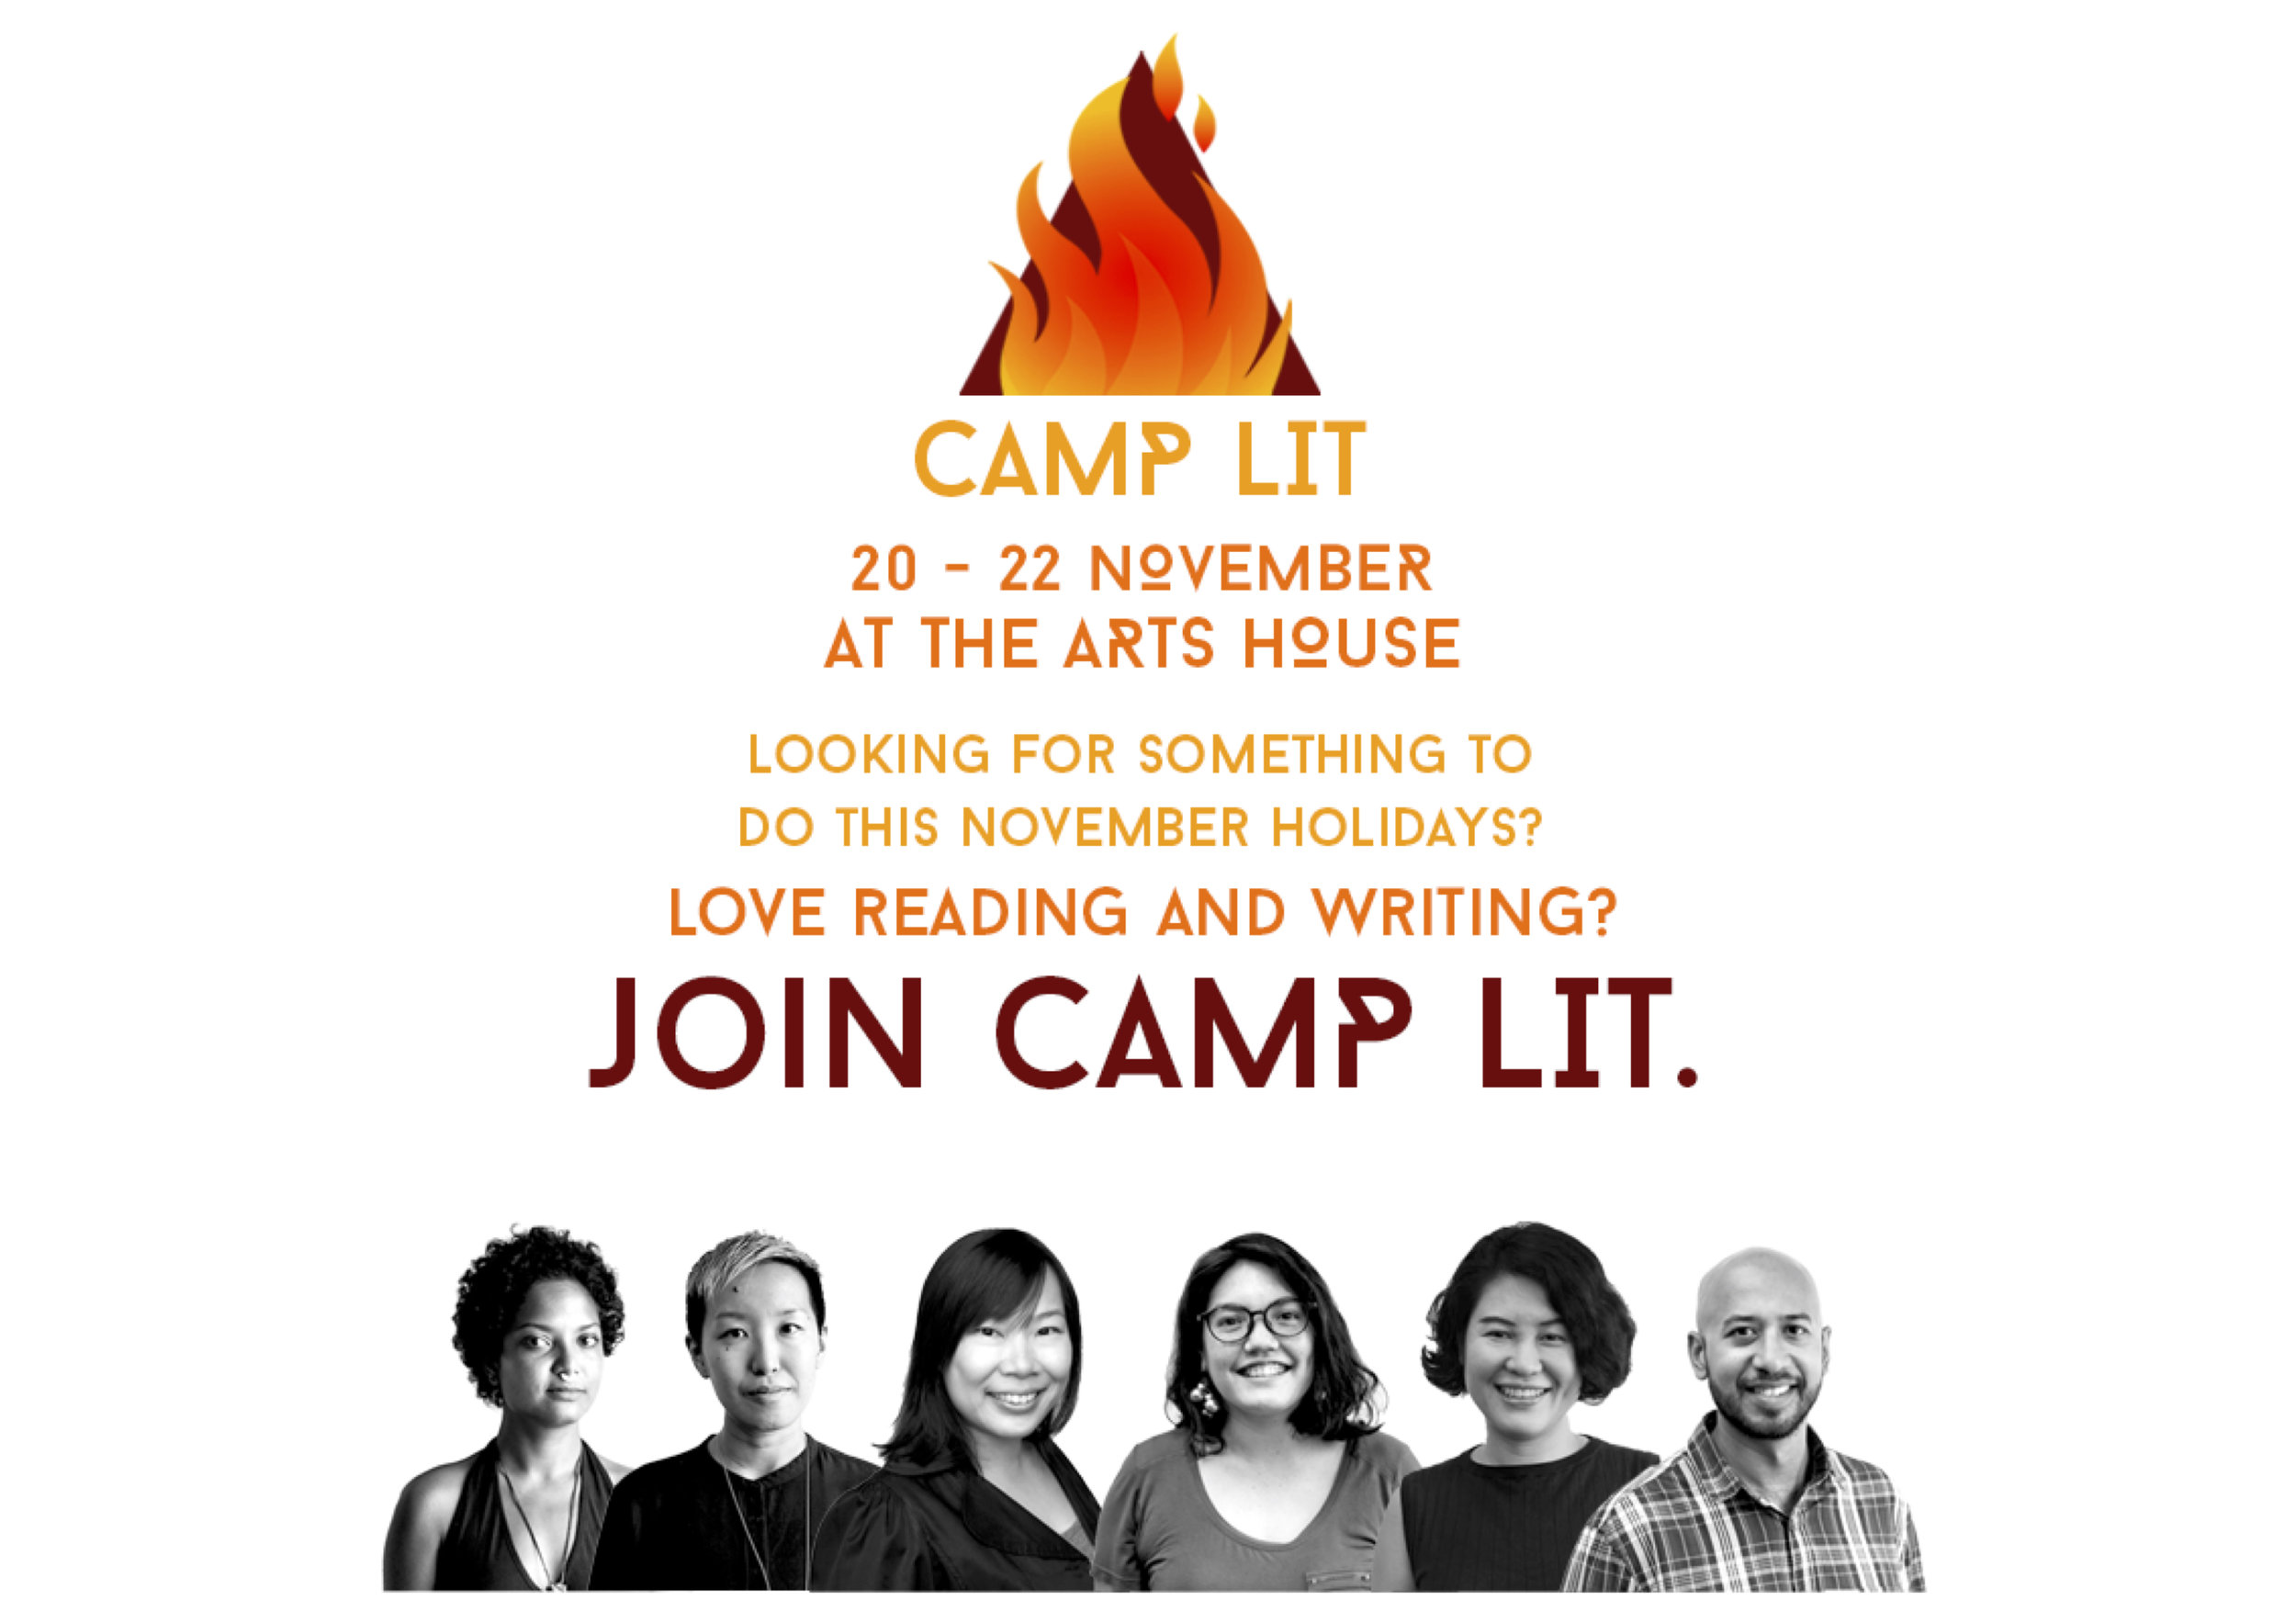  Sing Lit Station &amp; Book A Writer presented Camp Lit in Nov 2017 